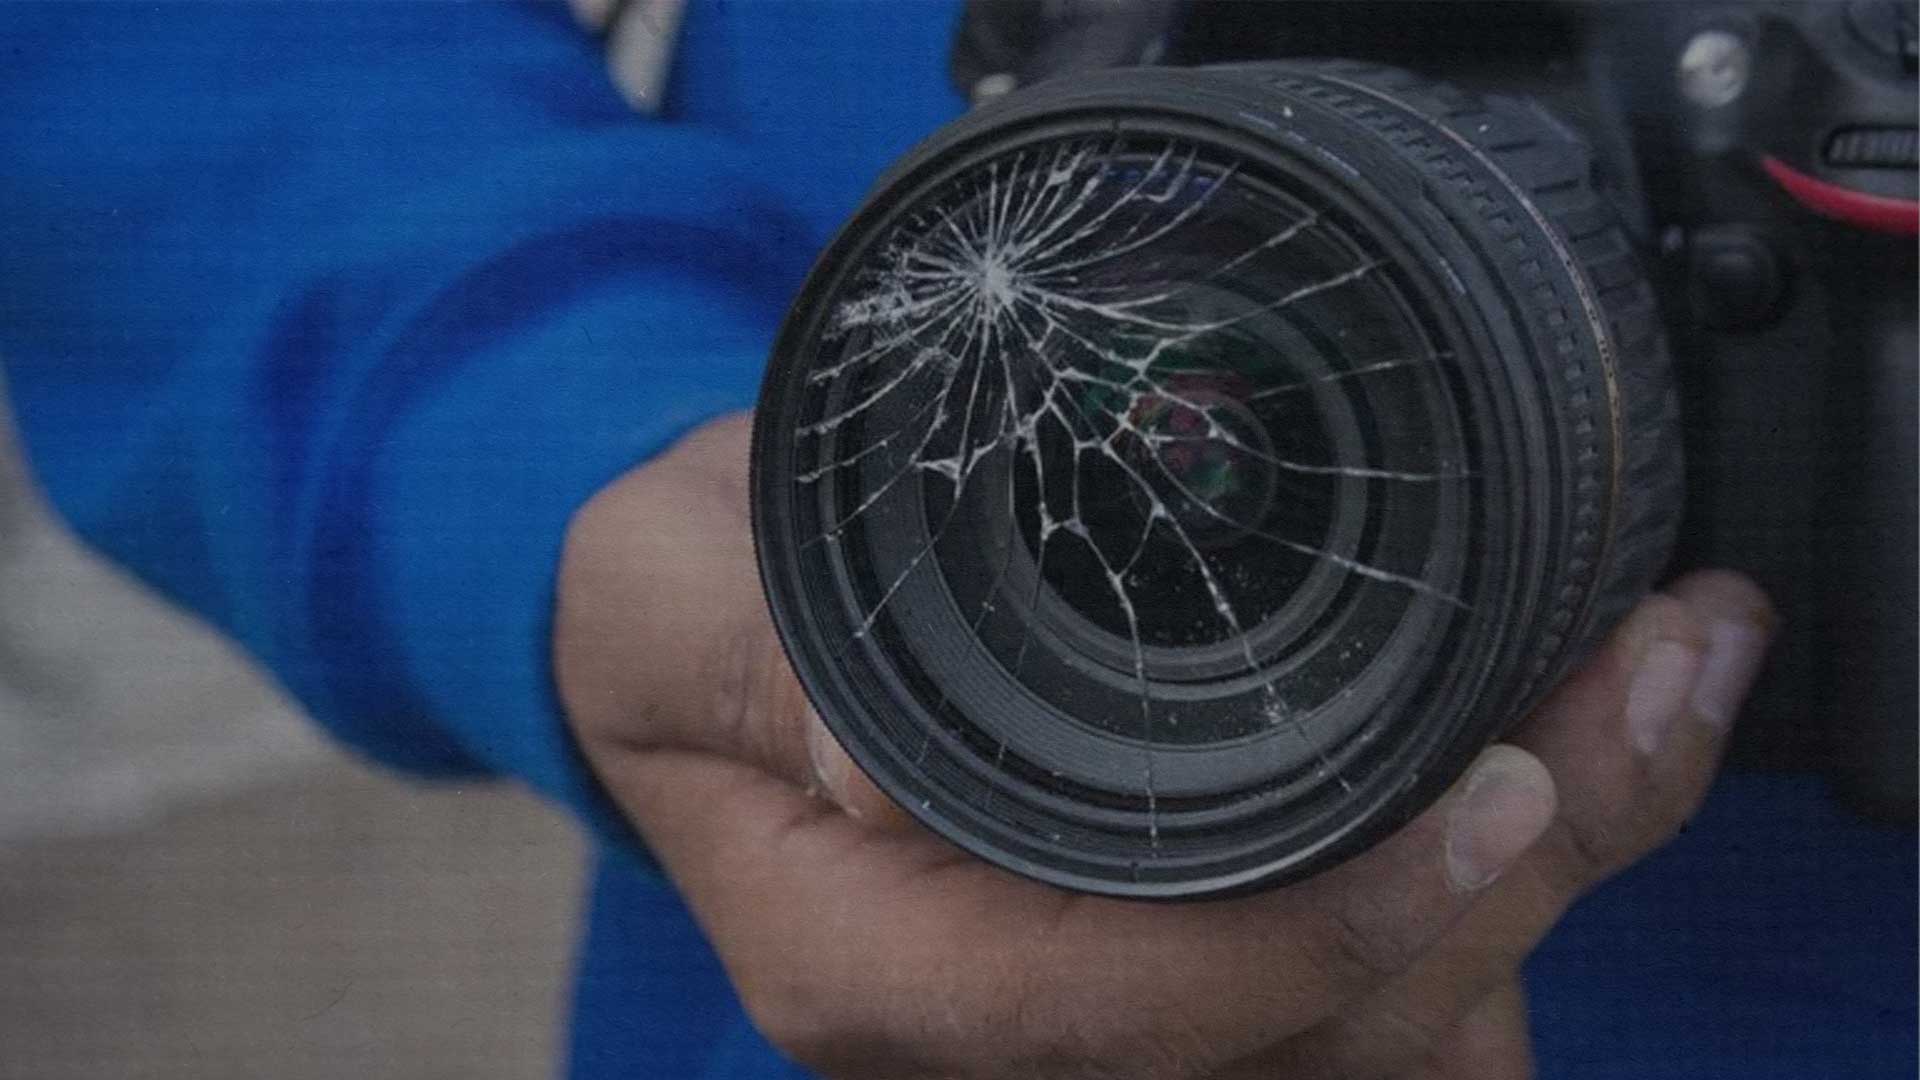  A journalist's broken camera lens.